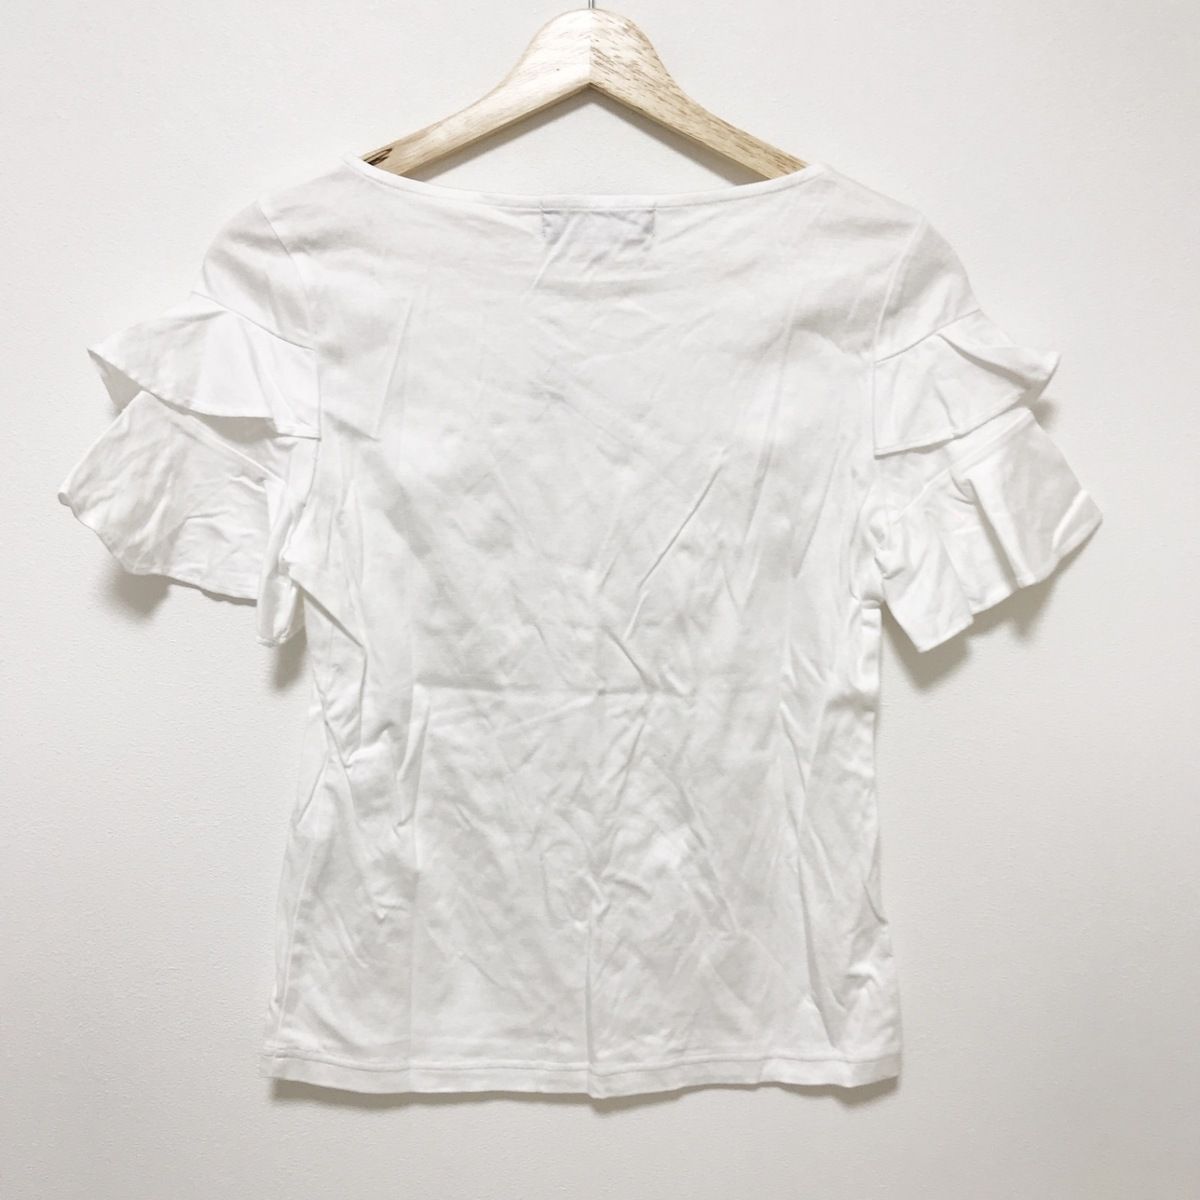 M'S GRACY(エムズグレイシー) 半袖Tシャツ サイズ38 M レディース - 白 ...